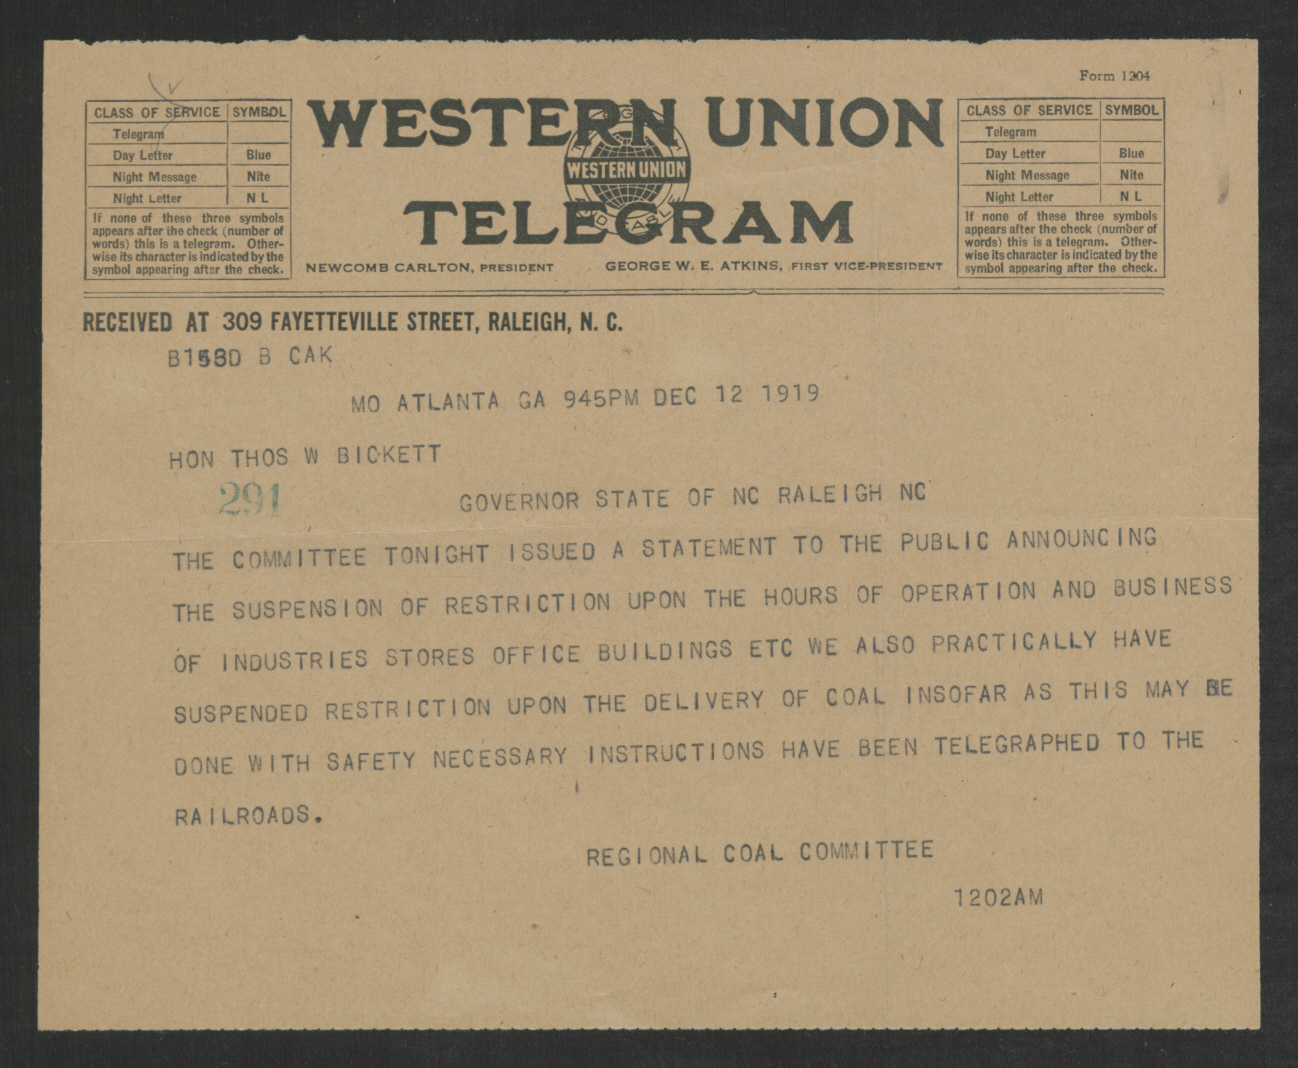 Telegram from the Regional Coal Committee to Thomas W. Bickett, December 12, 1919